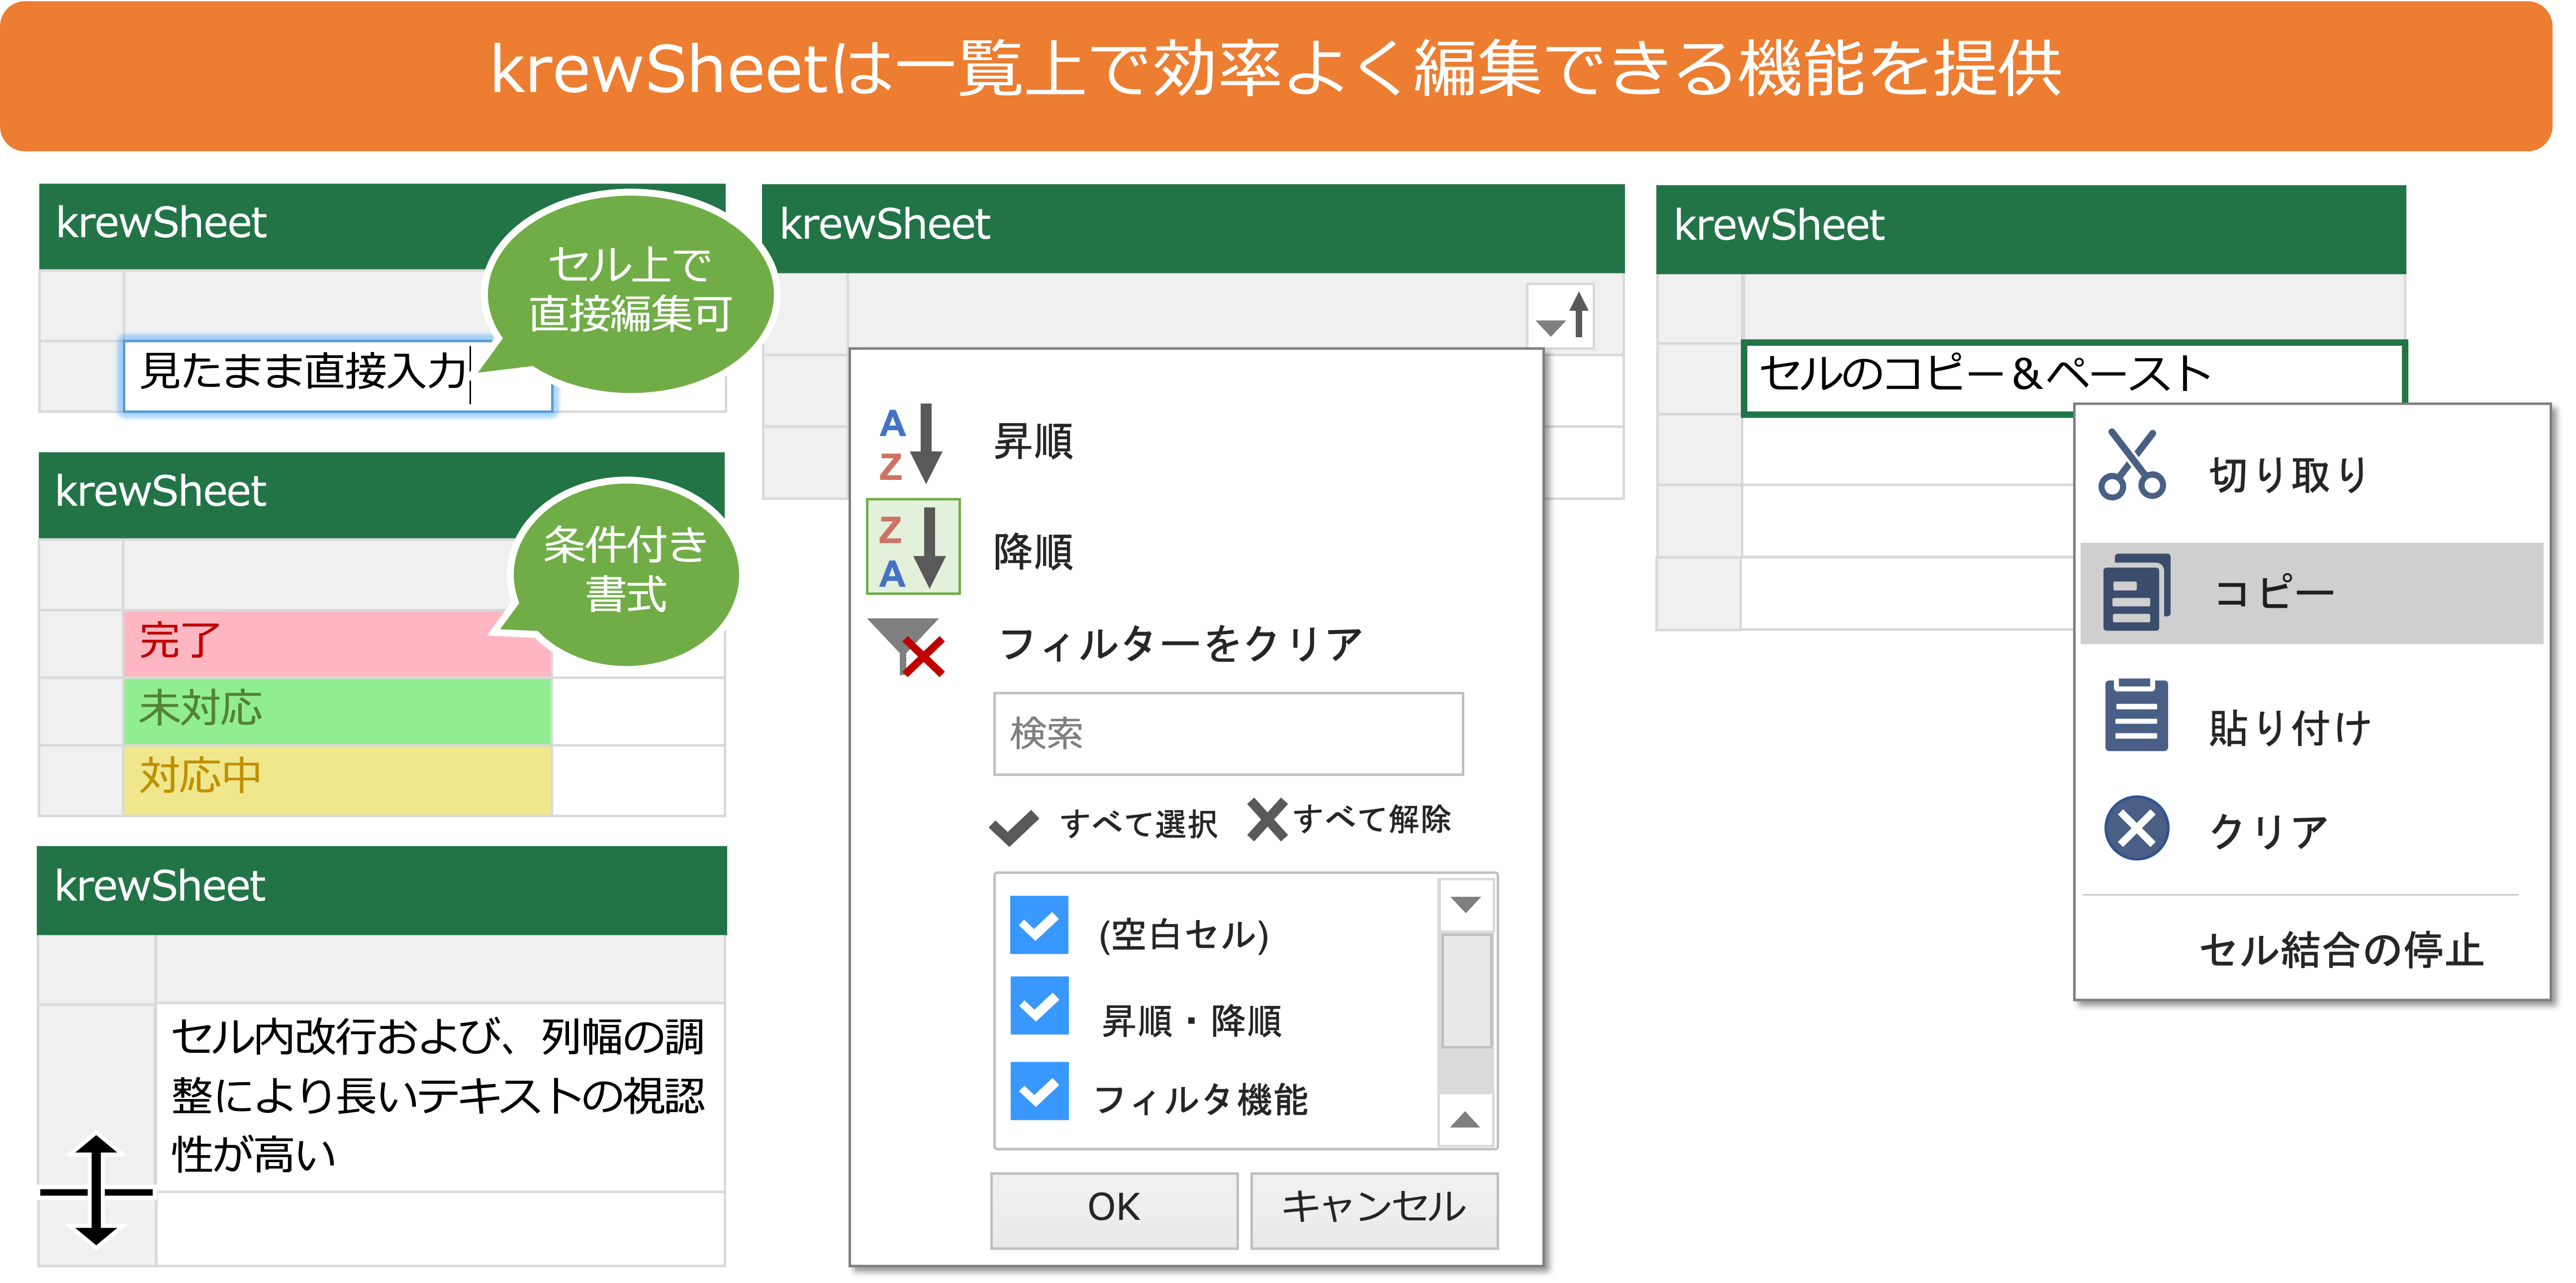 krewSheetは一覧上で効率よく編集できる機能を提供